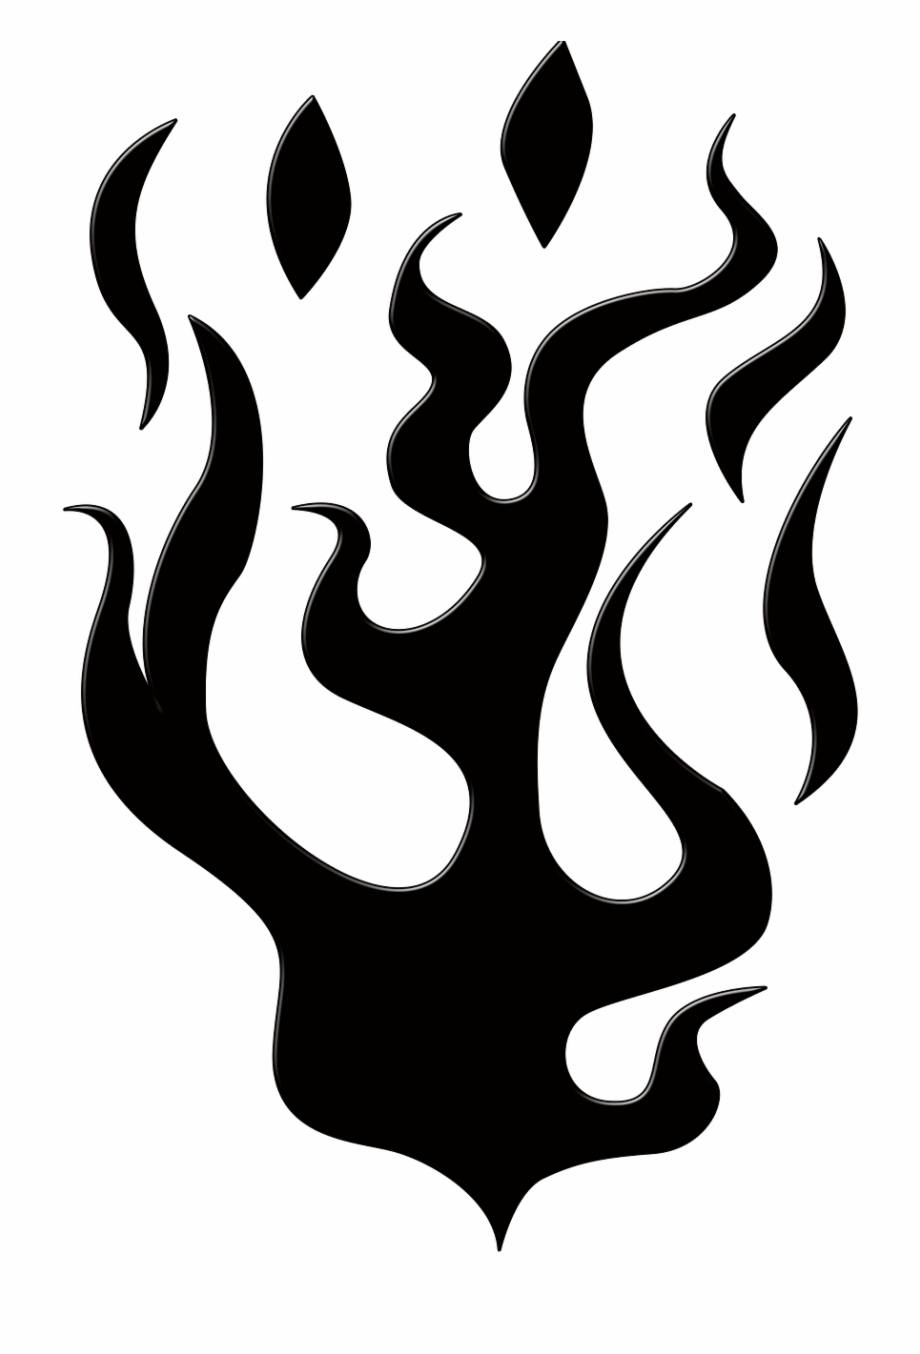 Flames silhouette shape.